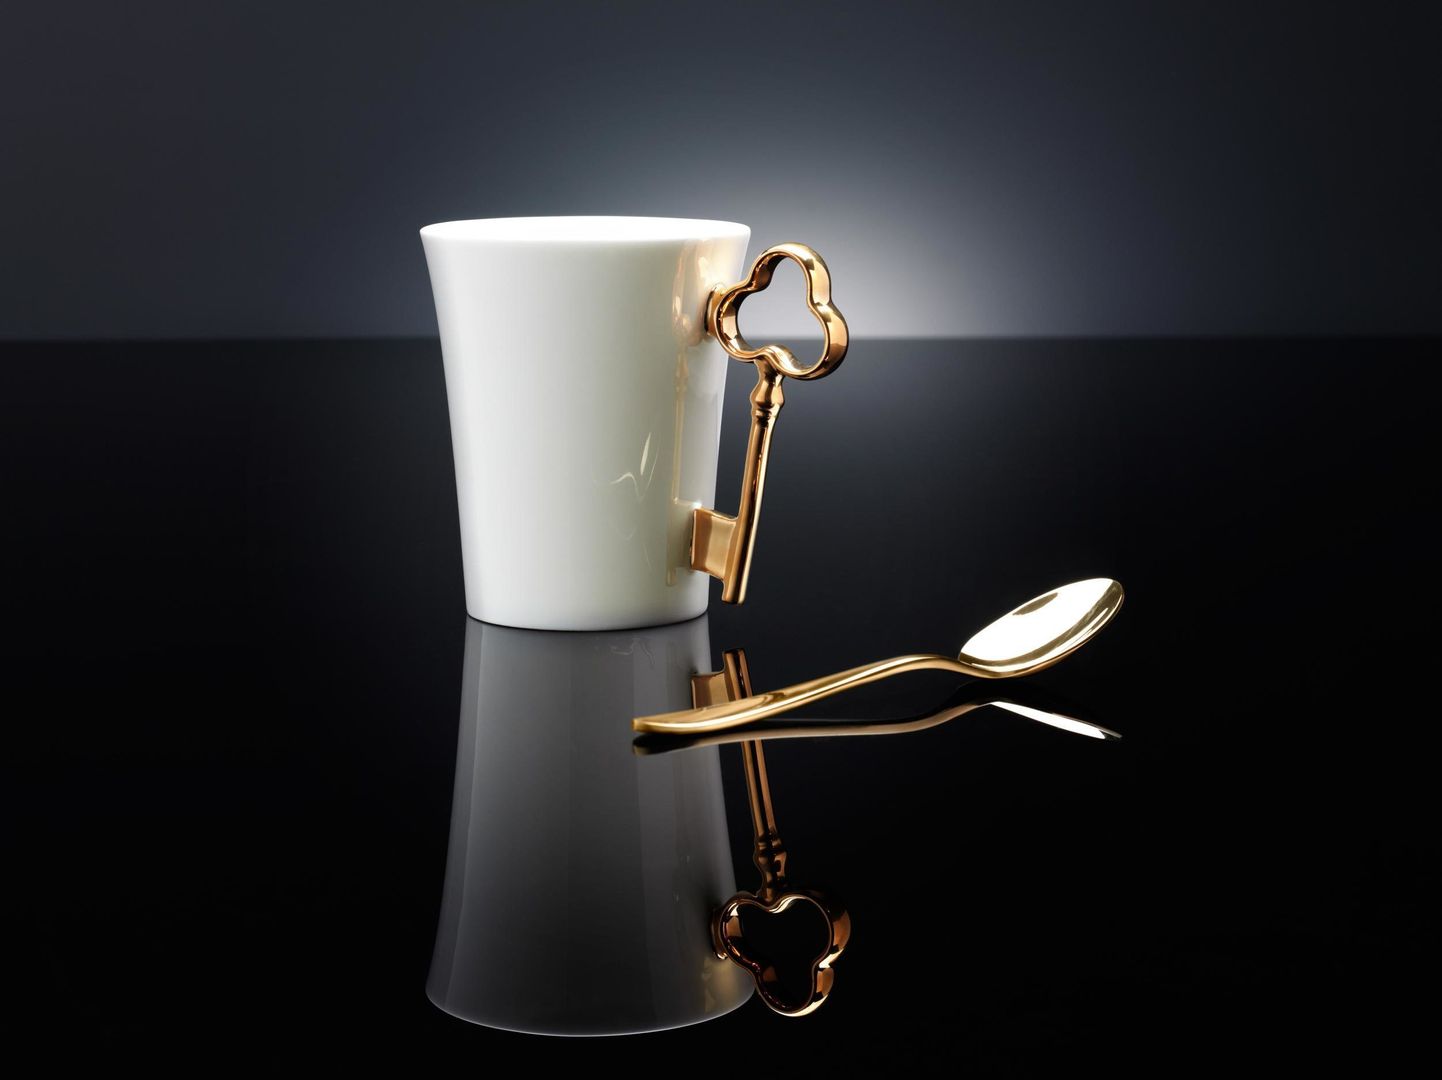 Gold Key Handle Mug Gary Birks Eclectic style kitchen Cutlery, crockery & glassware